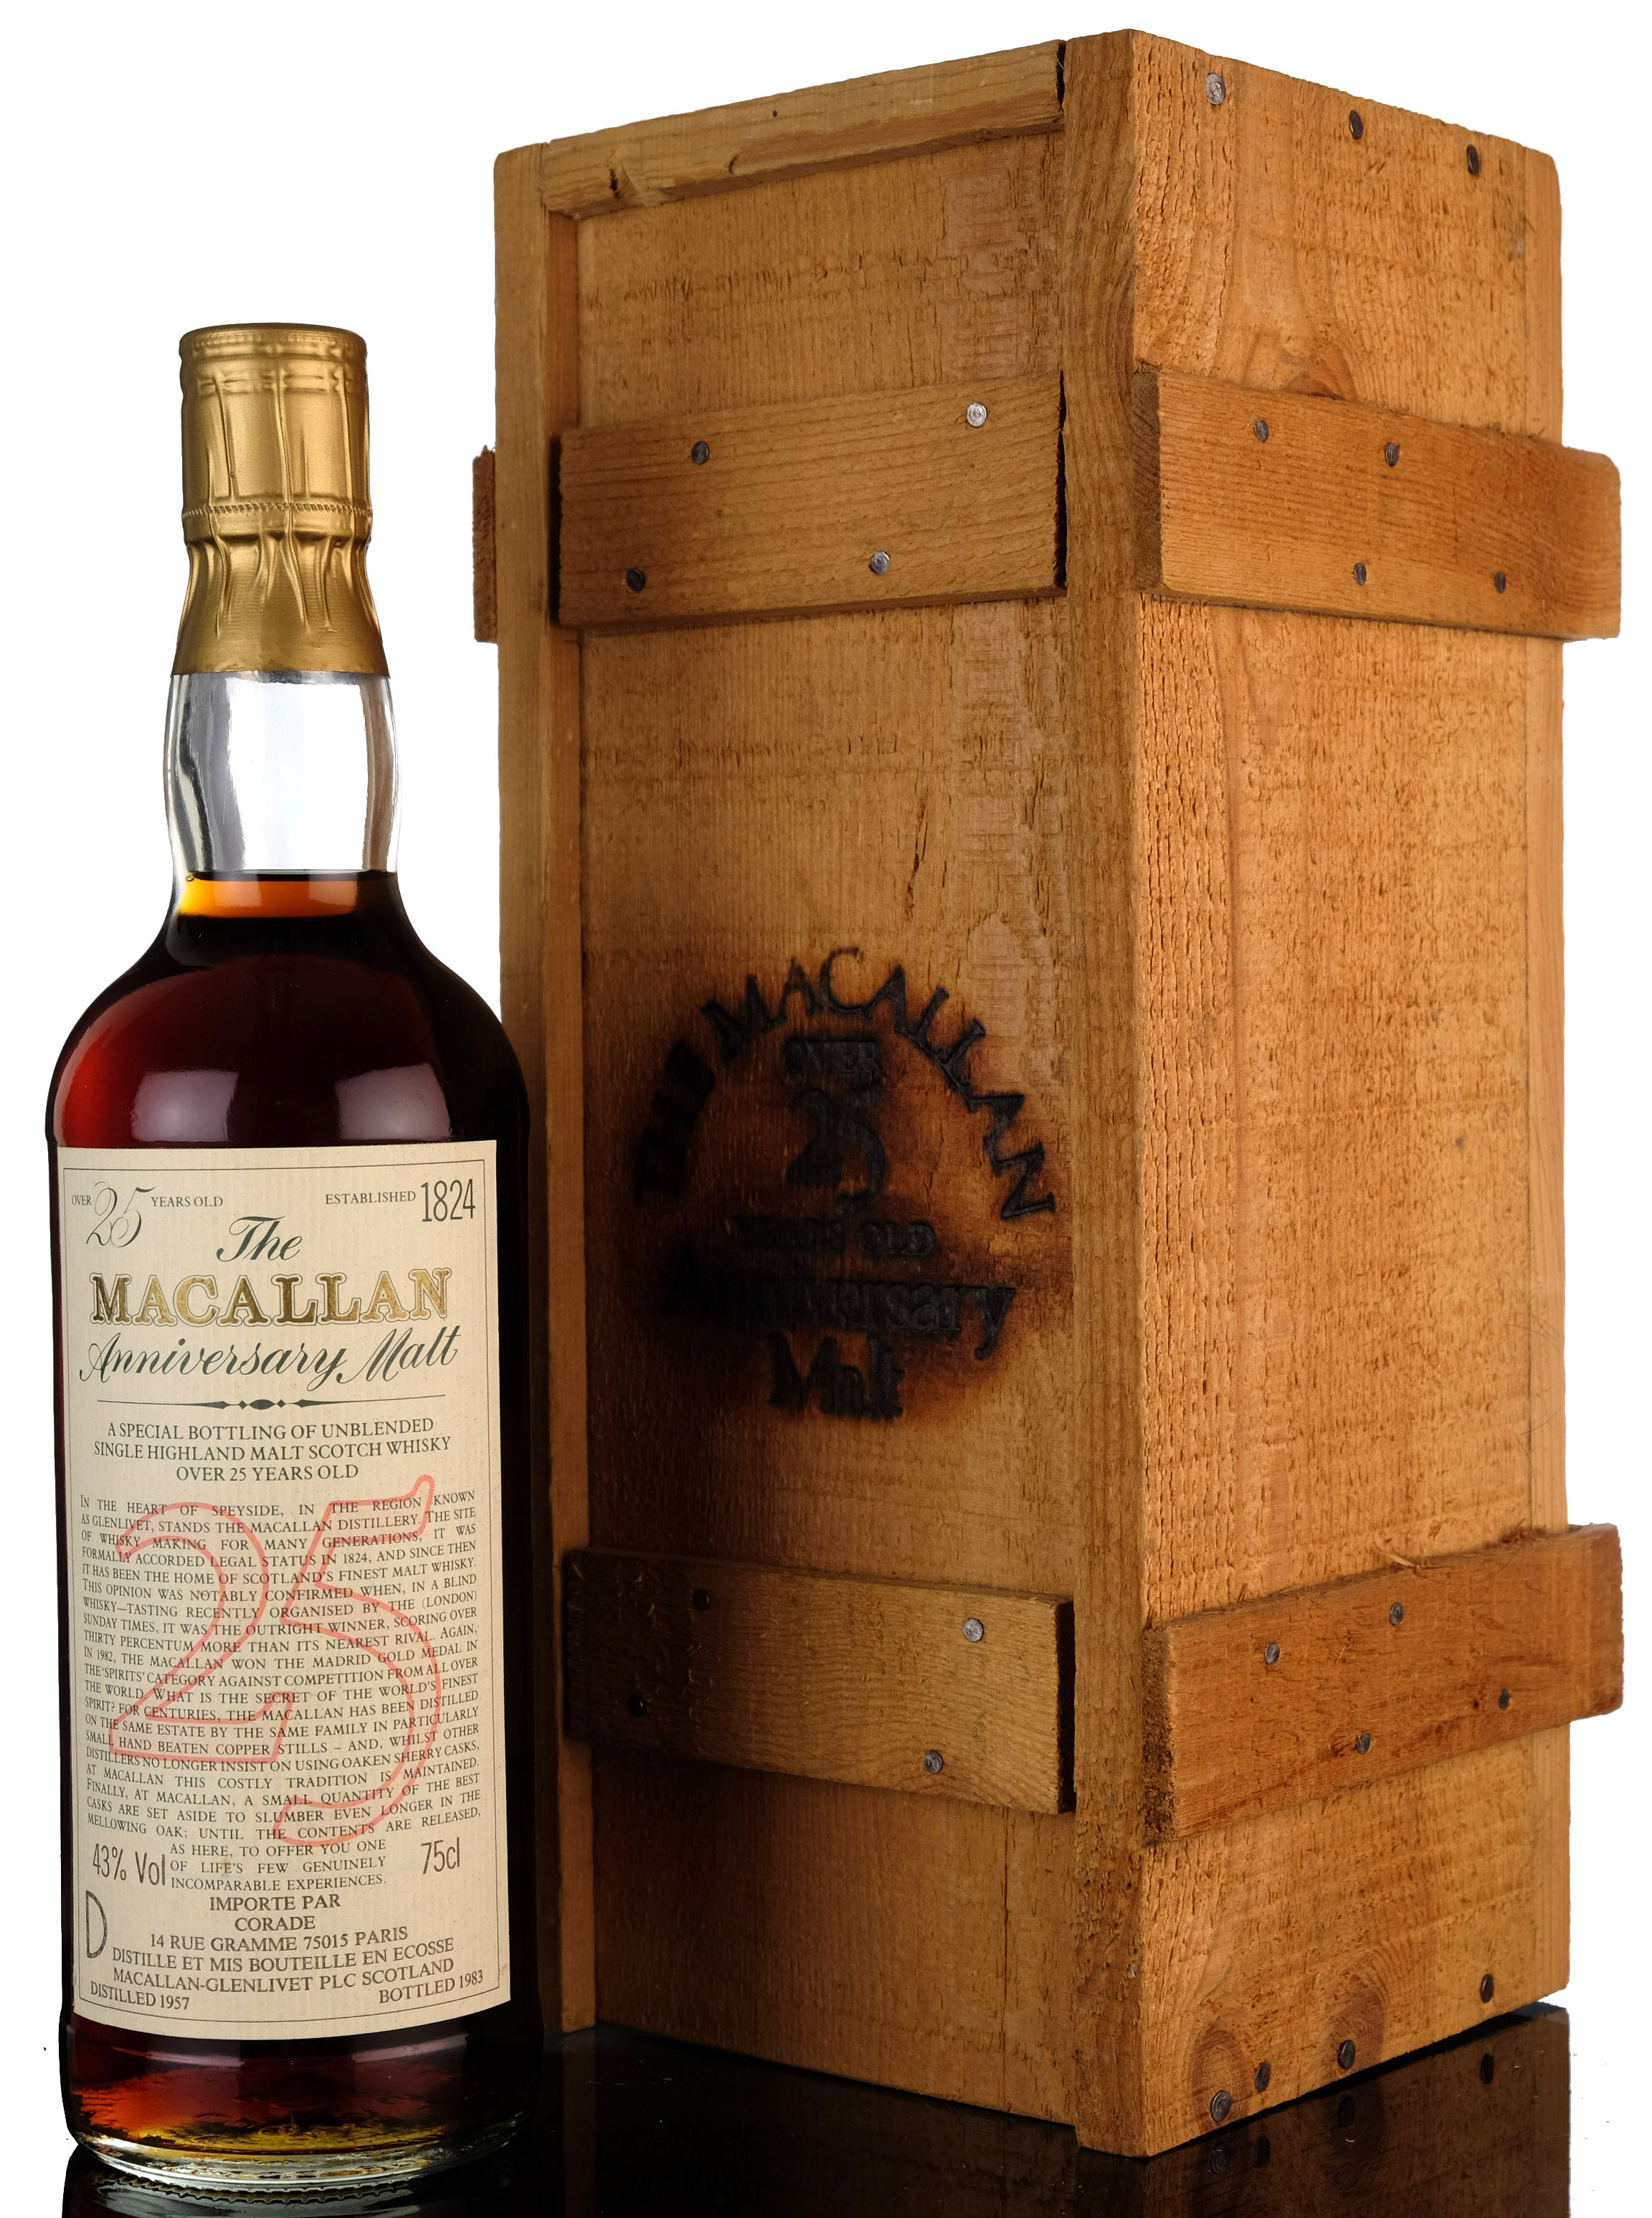 Macallan 1957-1983 - 25 Year Old Anniversary Malt